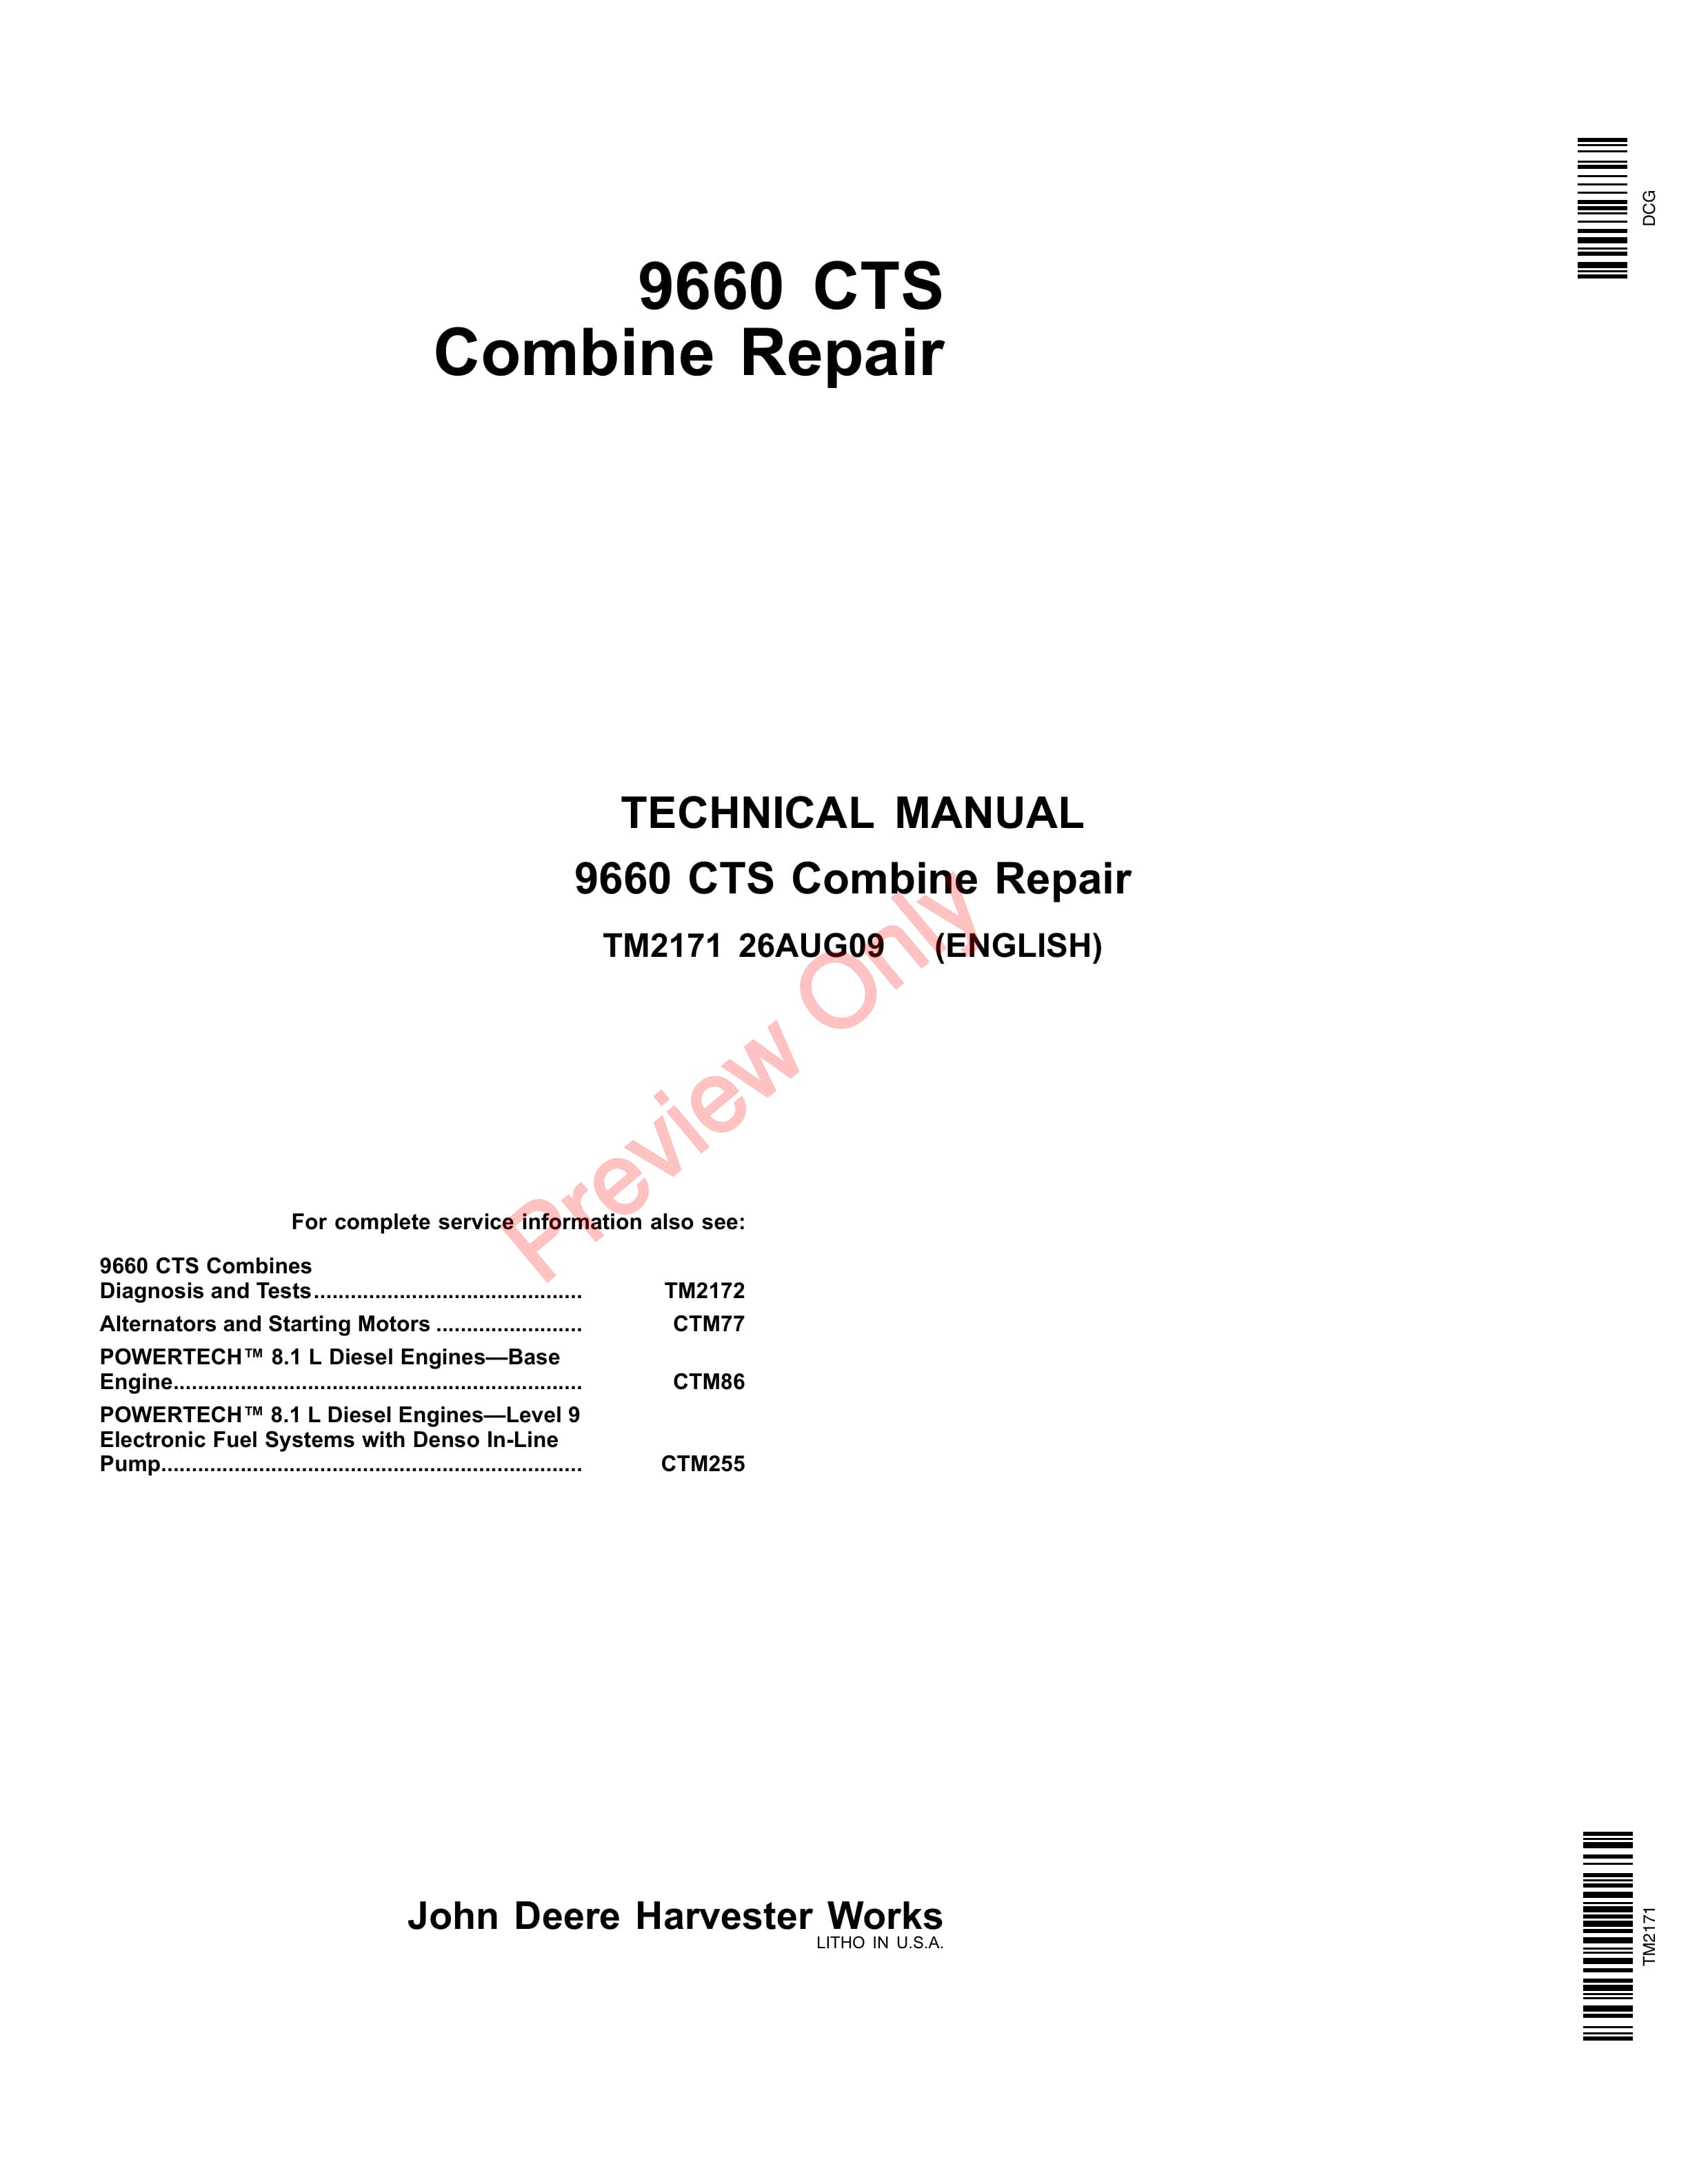 John Deere 9660 CTS Self Propelled Combine 705401 Technical Manual TM2171 26AUG09 1